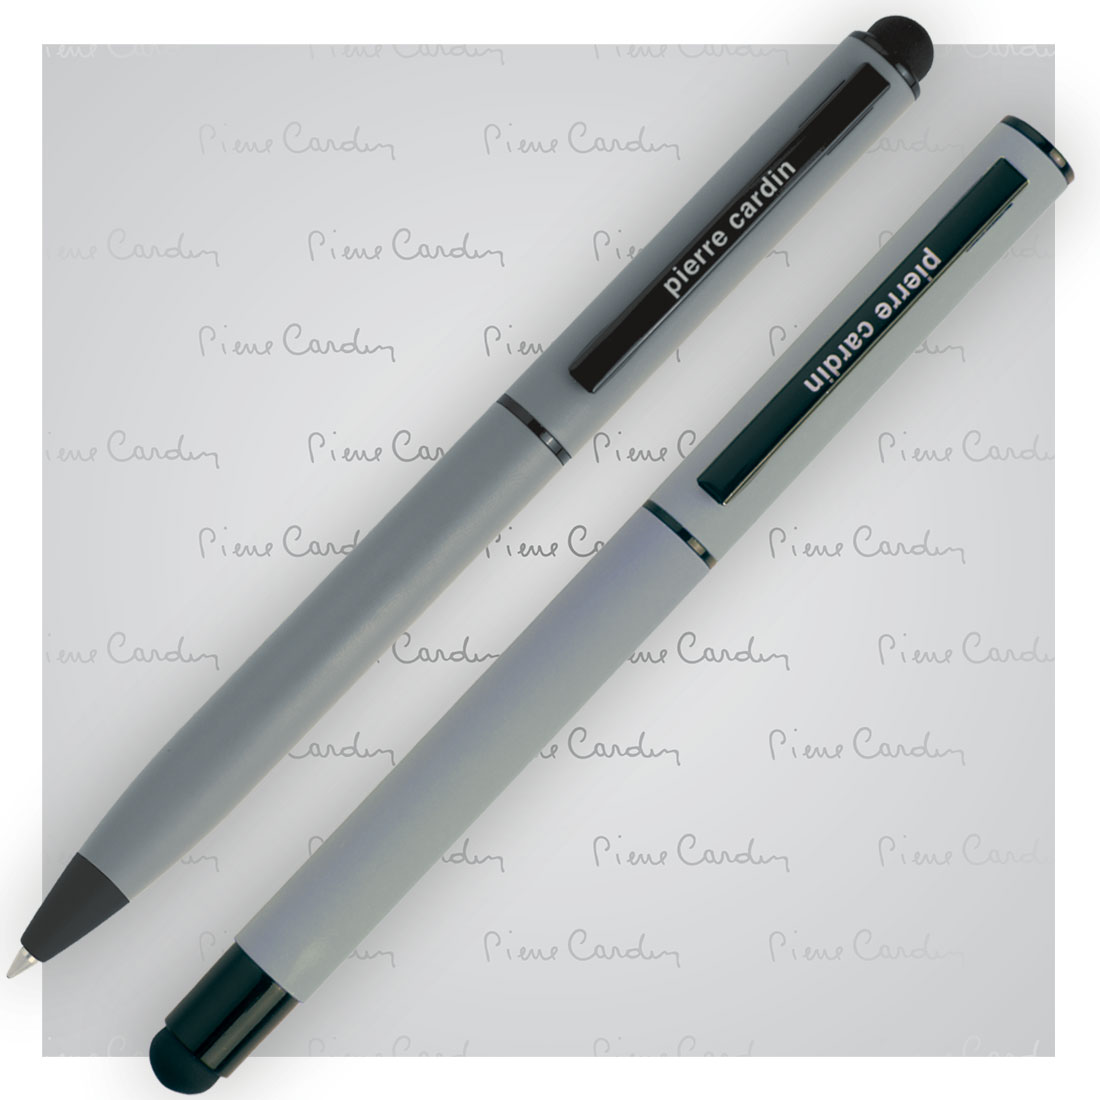 Zestaw piśmienny touch pen, soft touch CELEBRATION Pierre Cardin